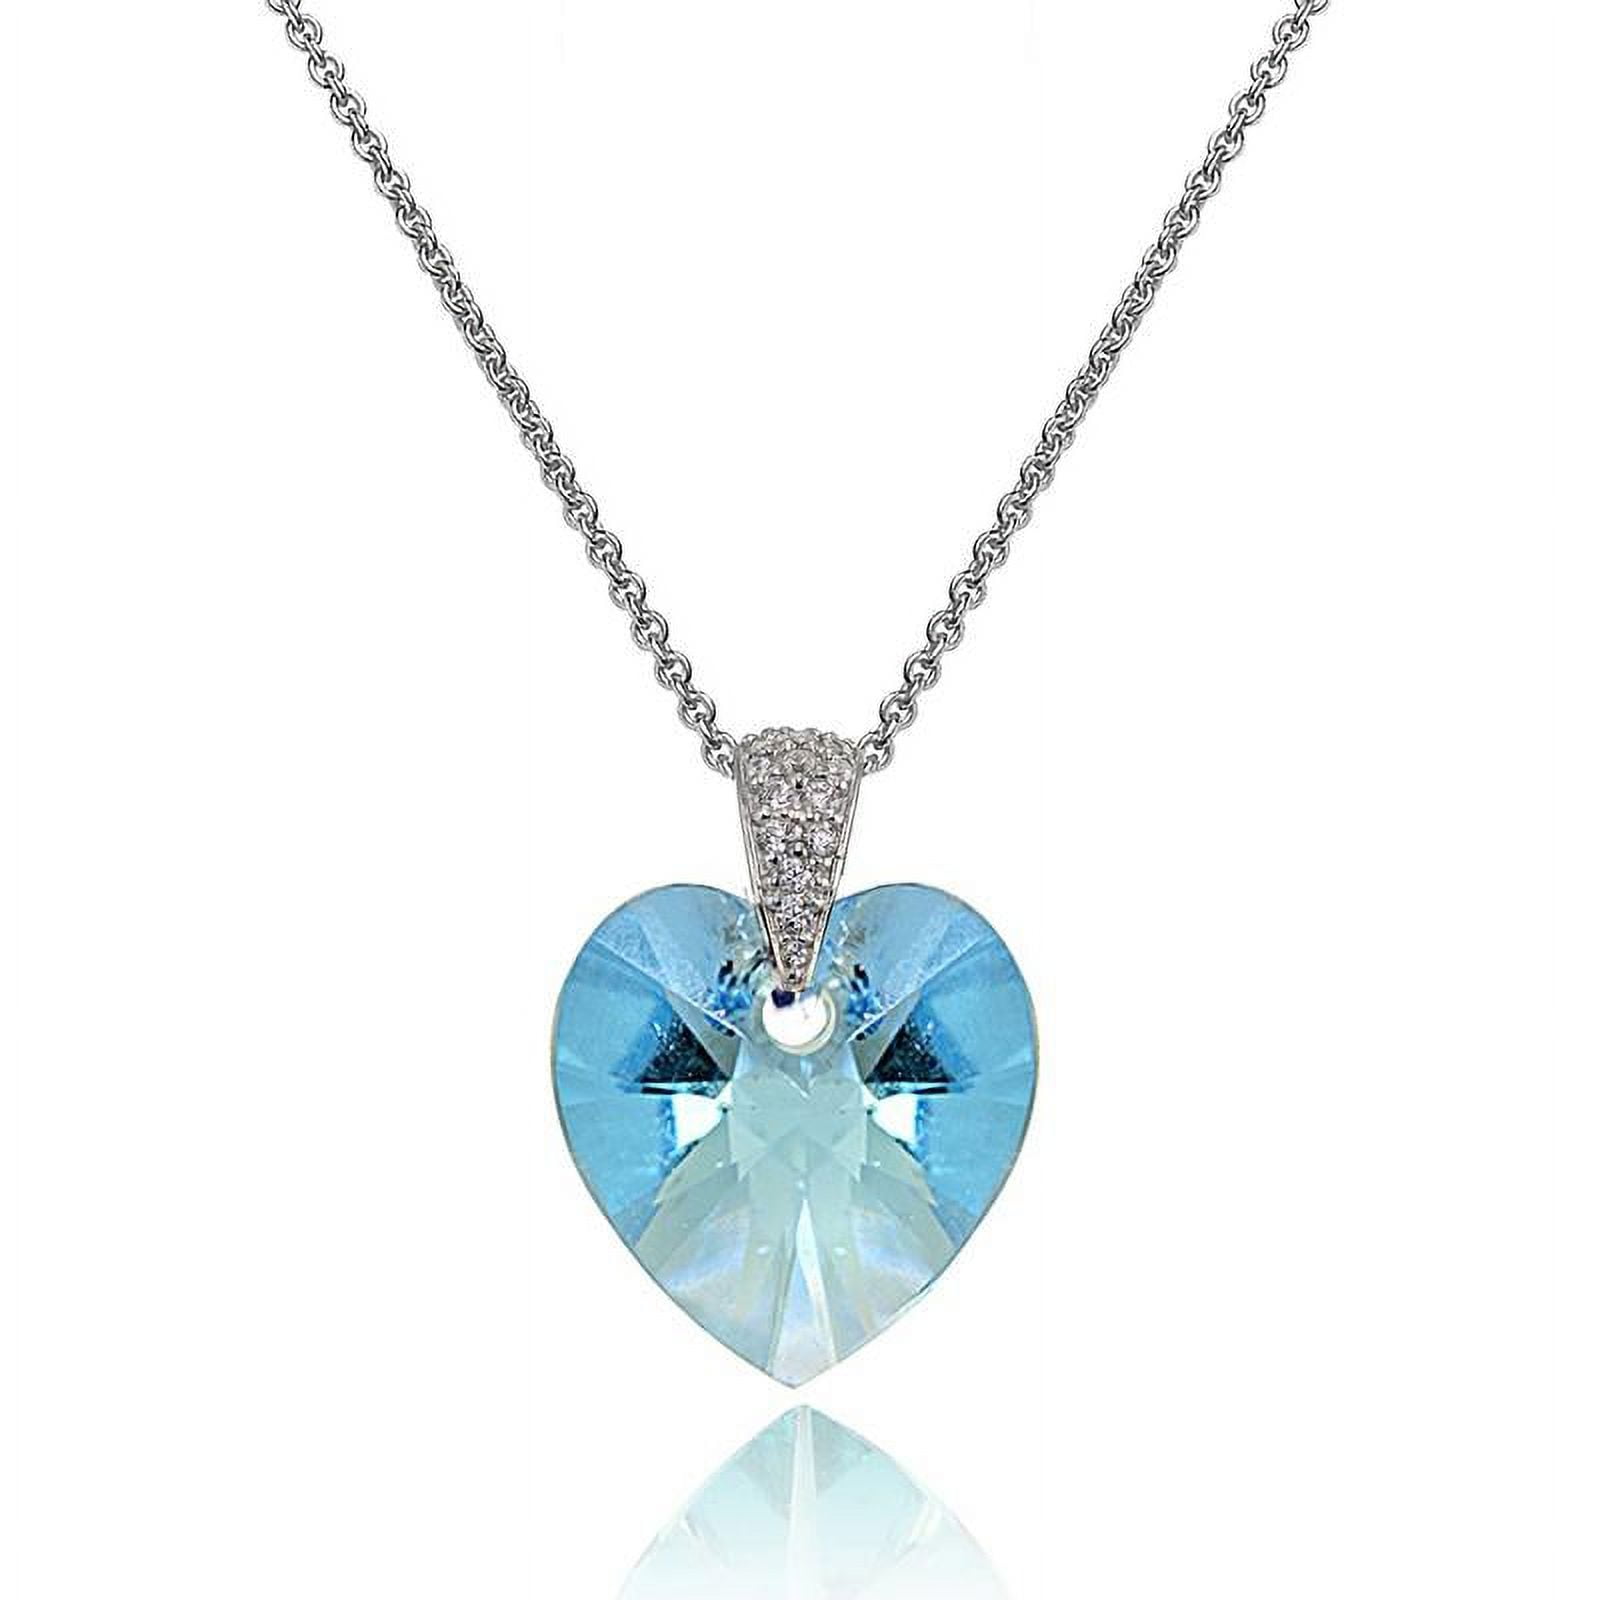 Meander - Blue opal silver necklace - GREEK ROOTS